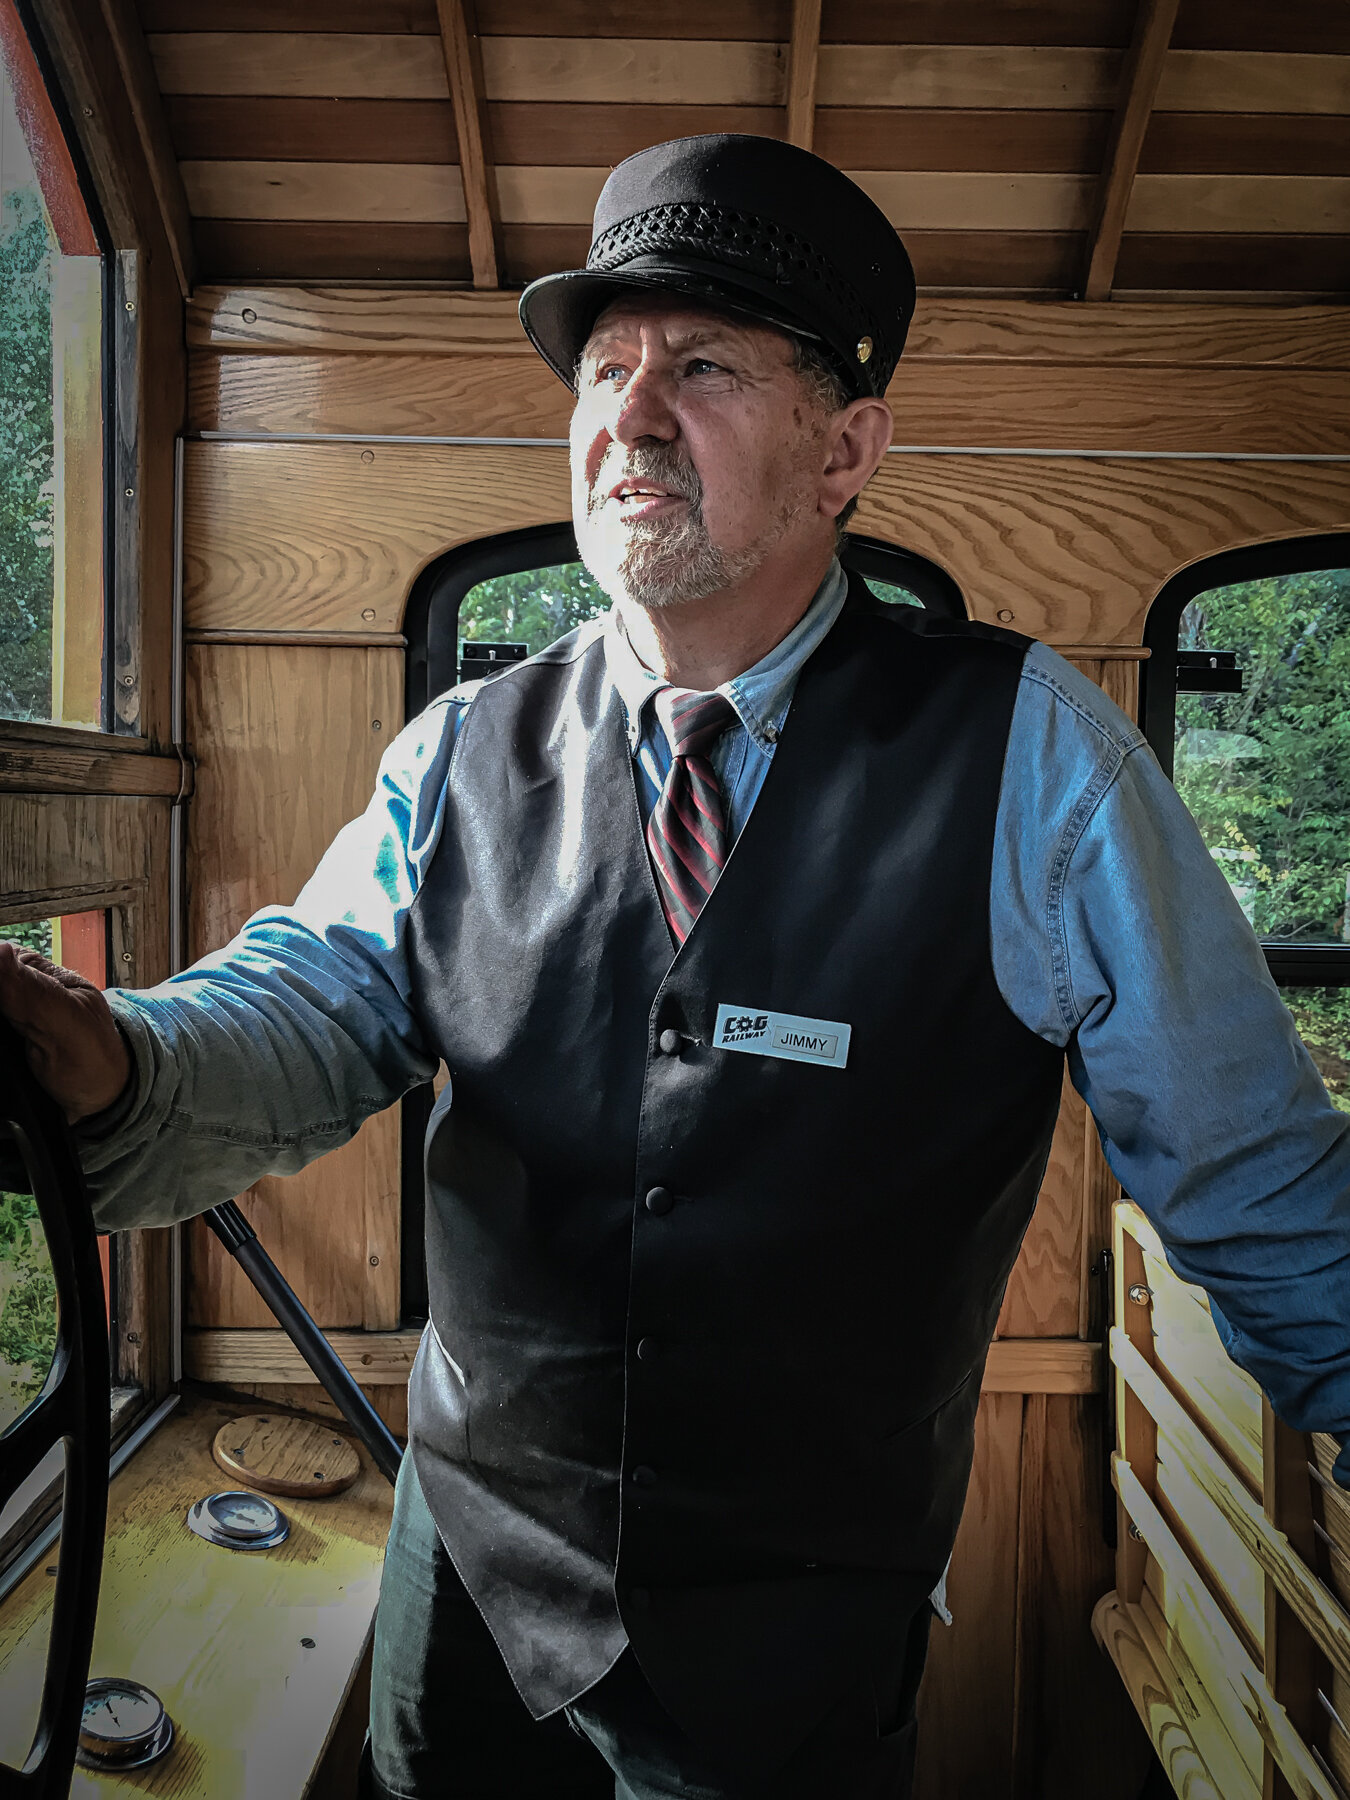 Boarding the Train — The Mount Washington Cog Railway